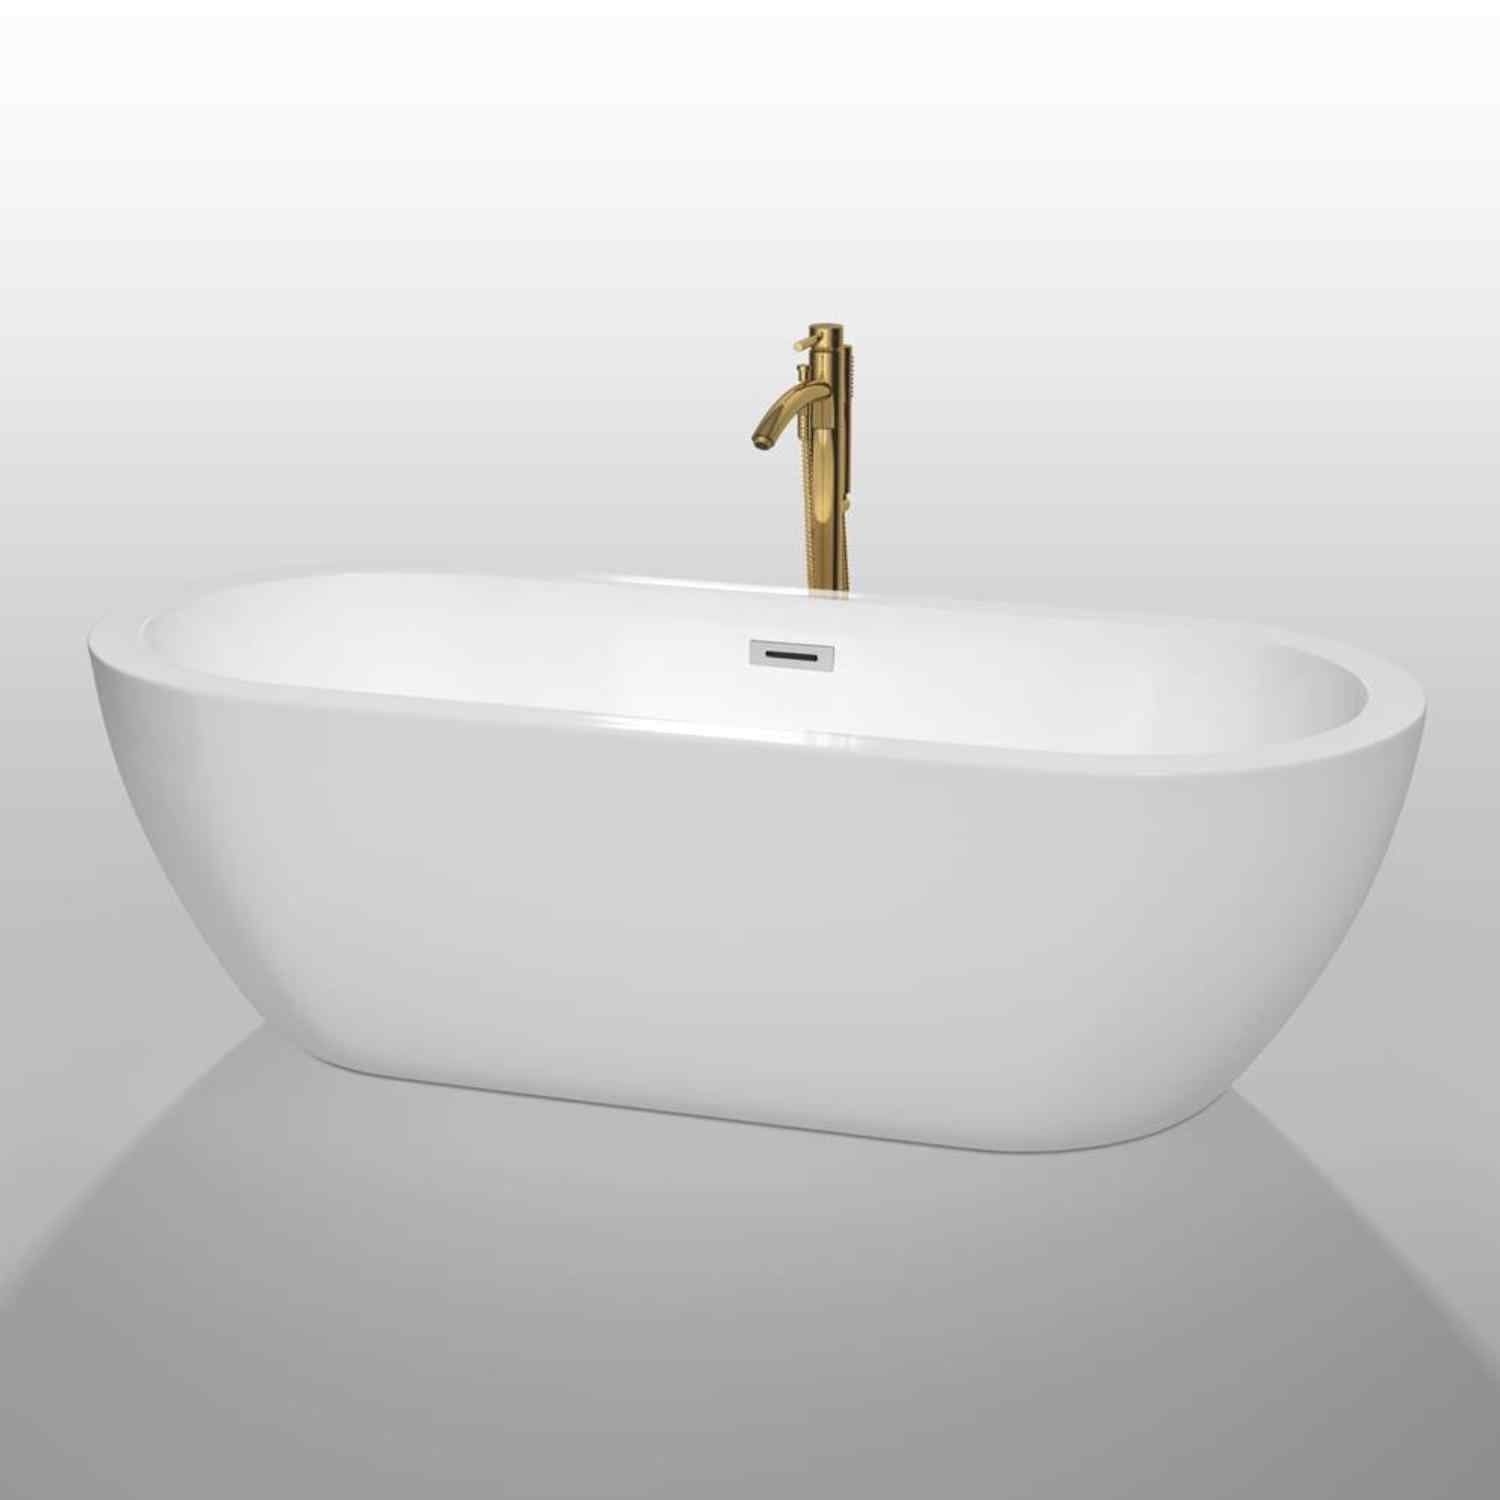 Wyndham collection Soho 72 Inch Freestanding Bathtub in White golden fuchet